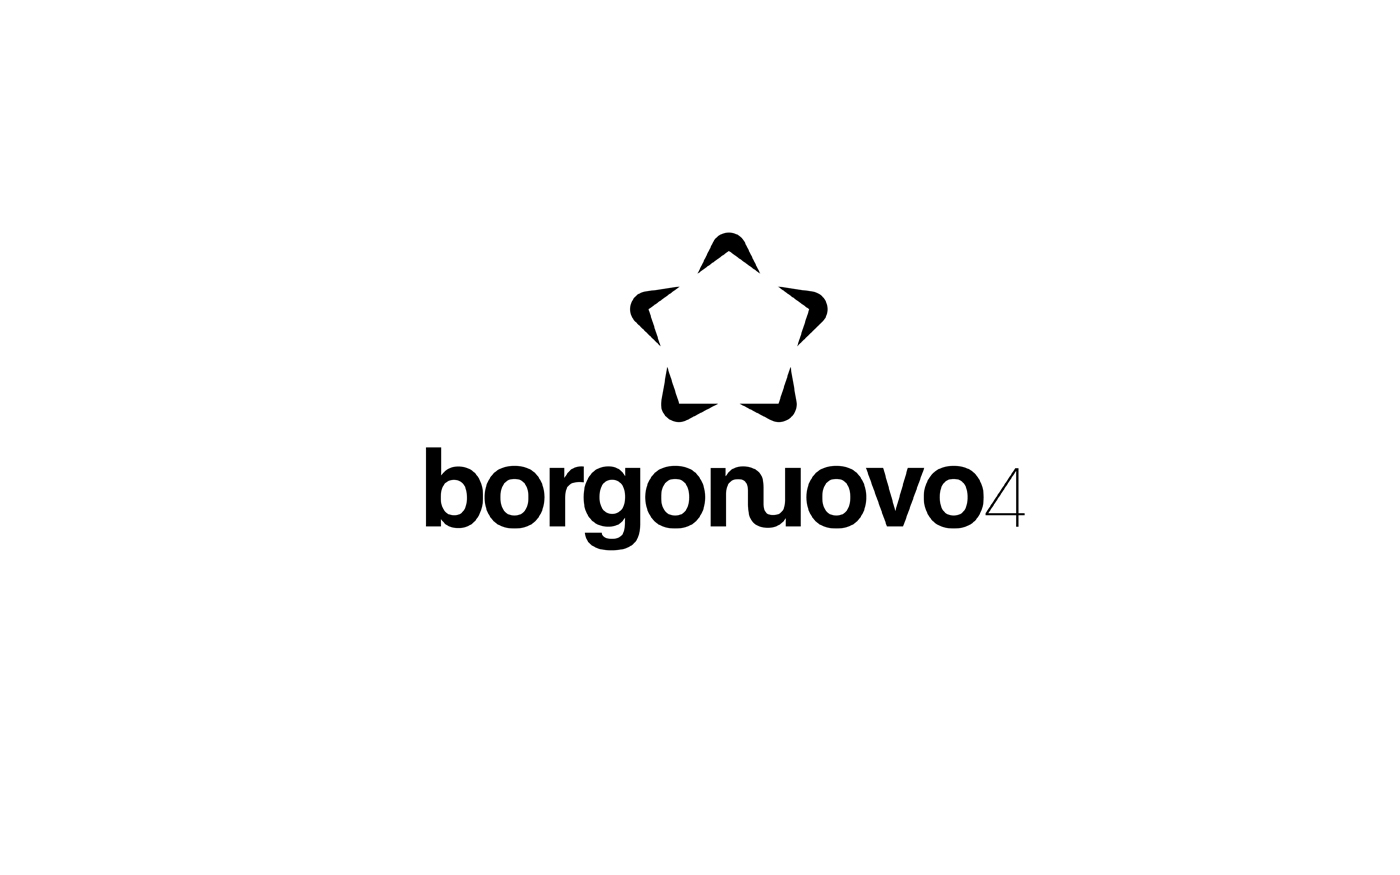 #borgonuovo4 #corpo8 Consulting lawyers accountants Auditors administrators